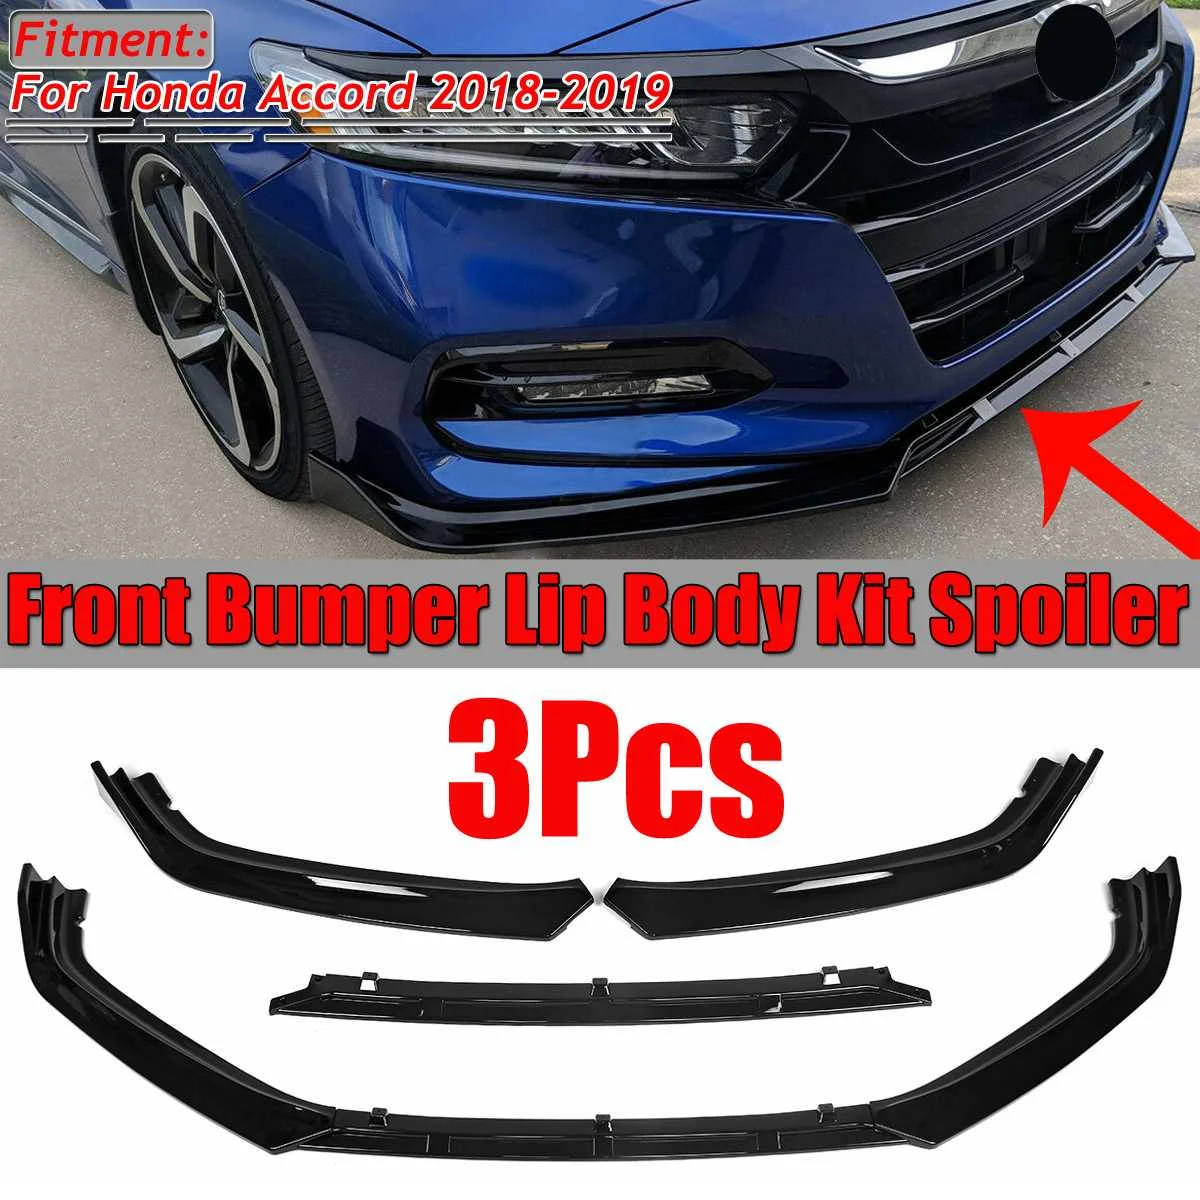 3pcs Car Front Bumper Lip Body Kit Spoiler Diffuser Splitter Guard Lip Protector Cover For Honda For Accord 10TH 2018 2019 2020